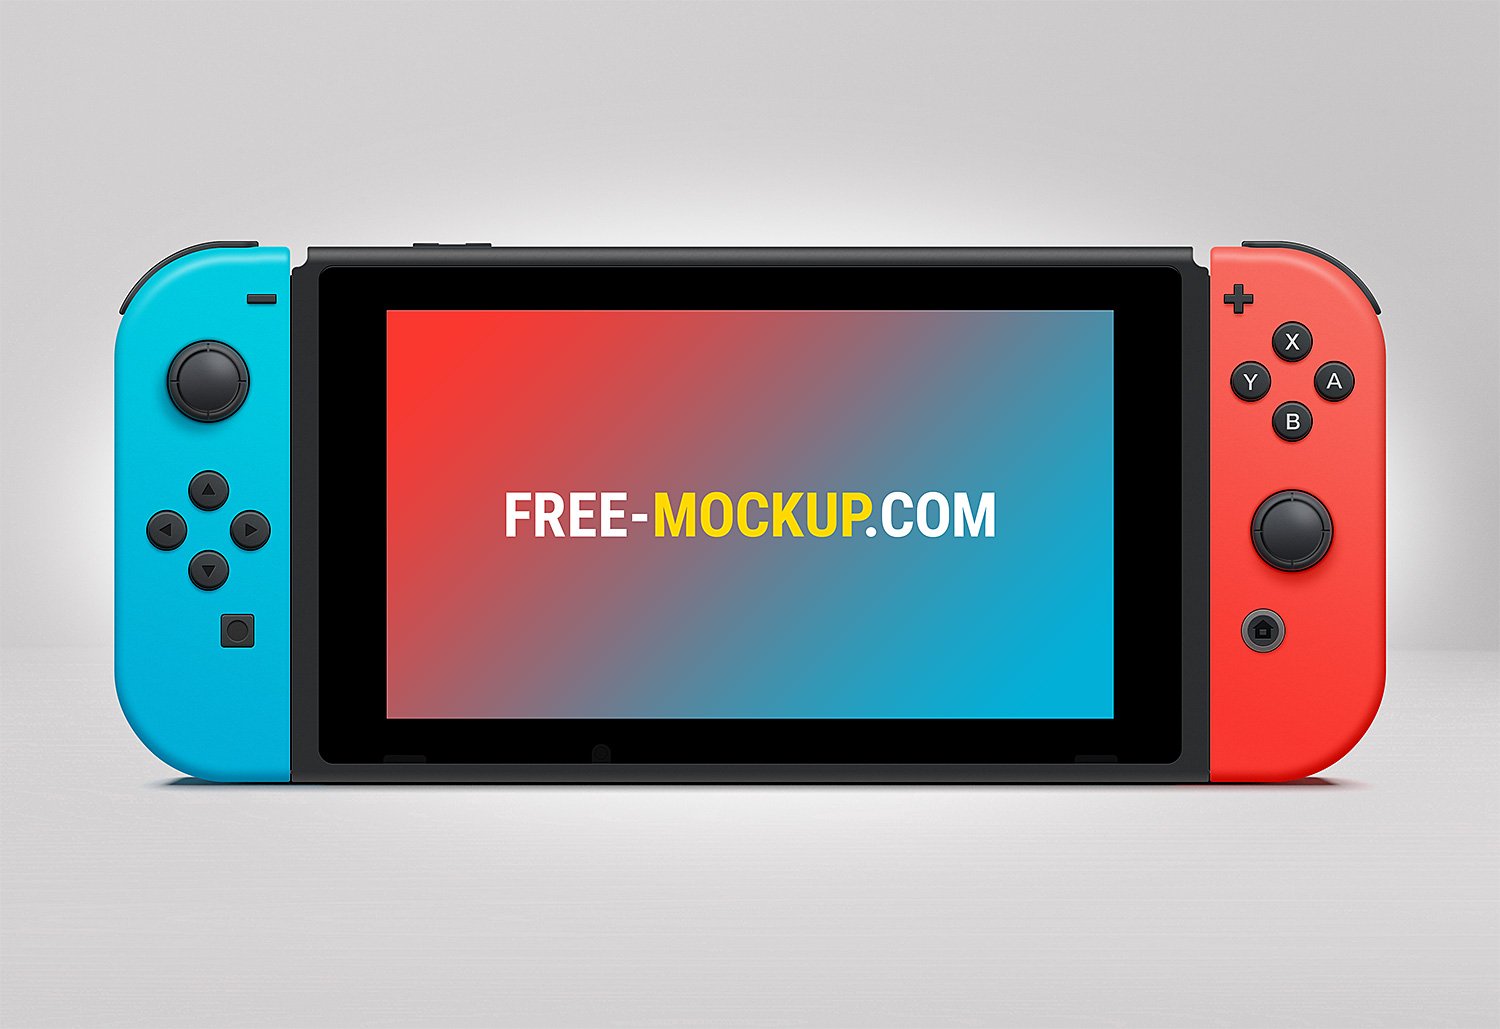 Mockup - Game Boy Advance Nintendo Switch Online 